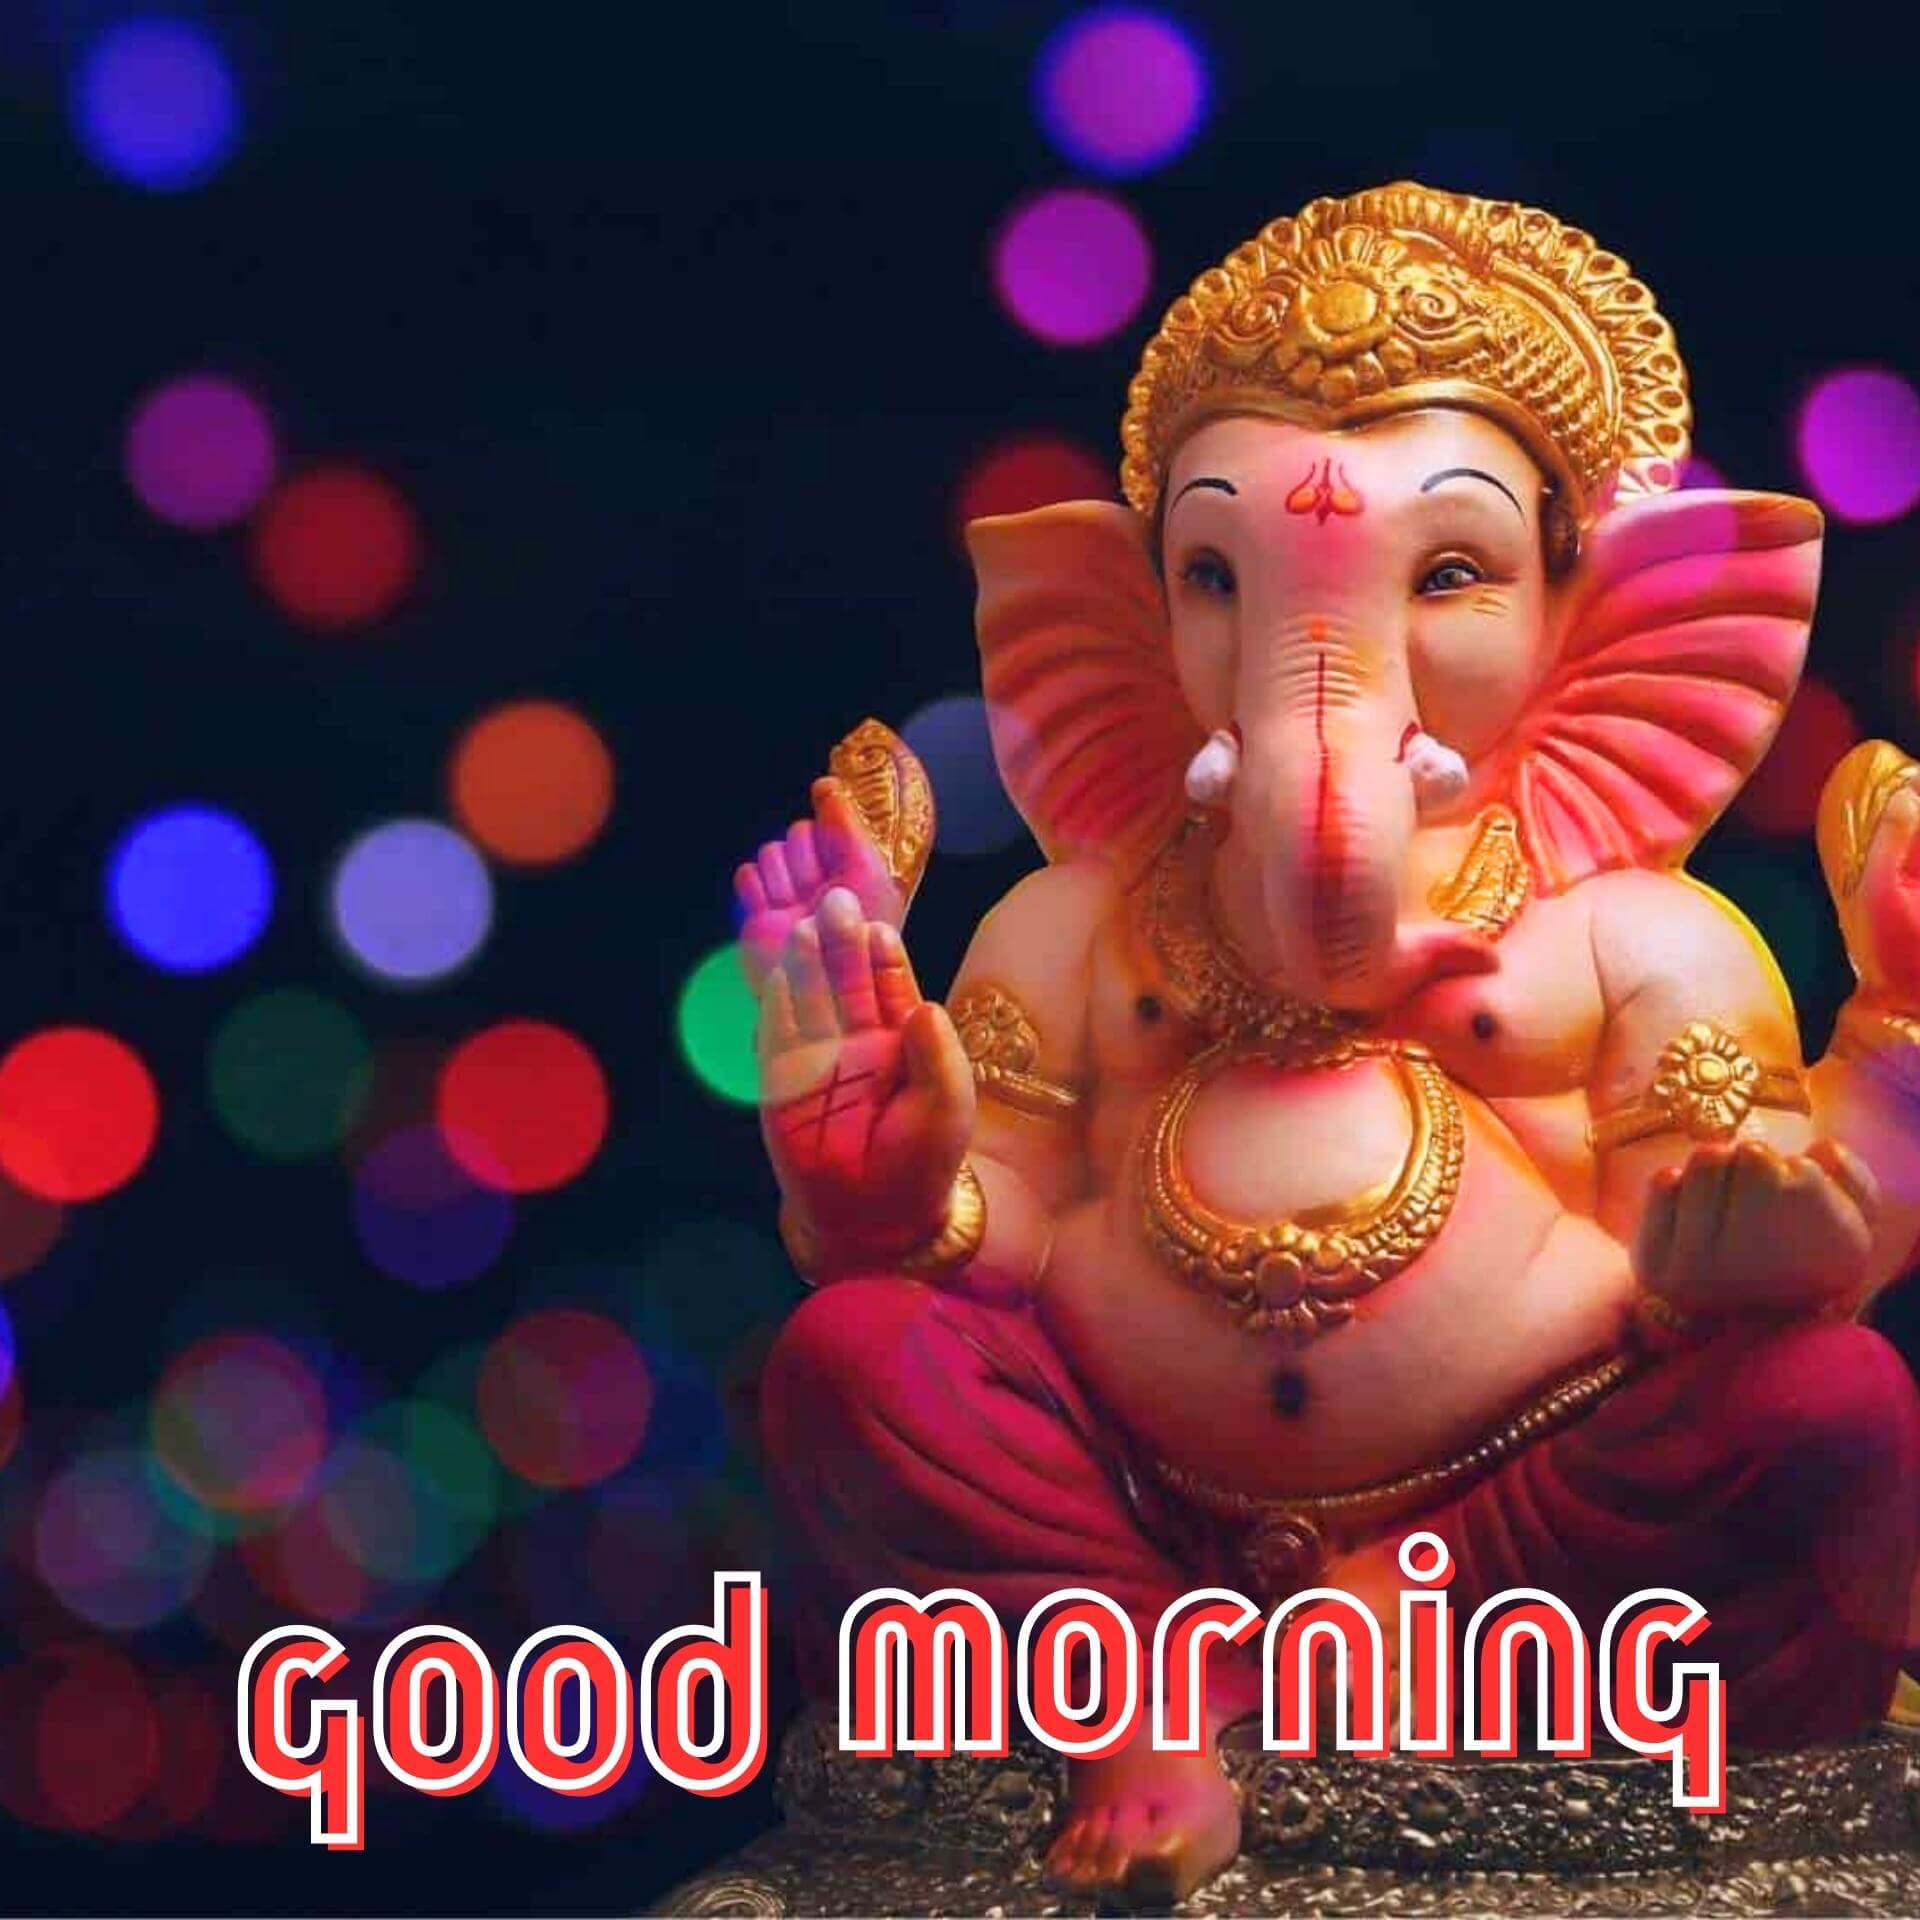 God Good Morning Wallpaper With Ganesha